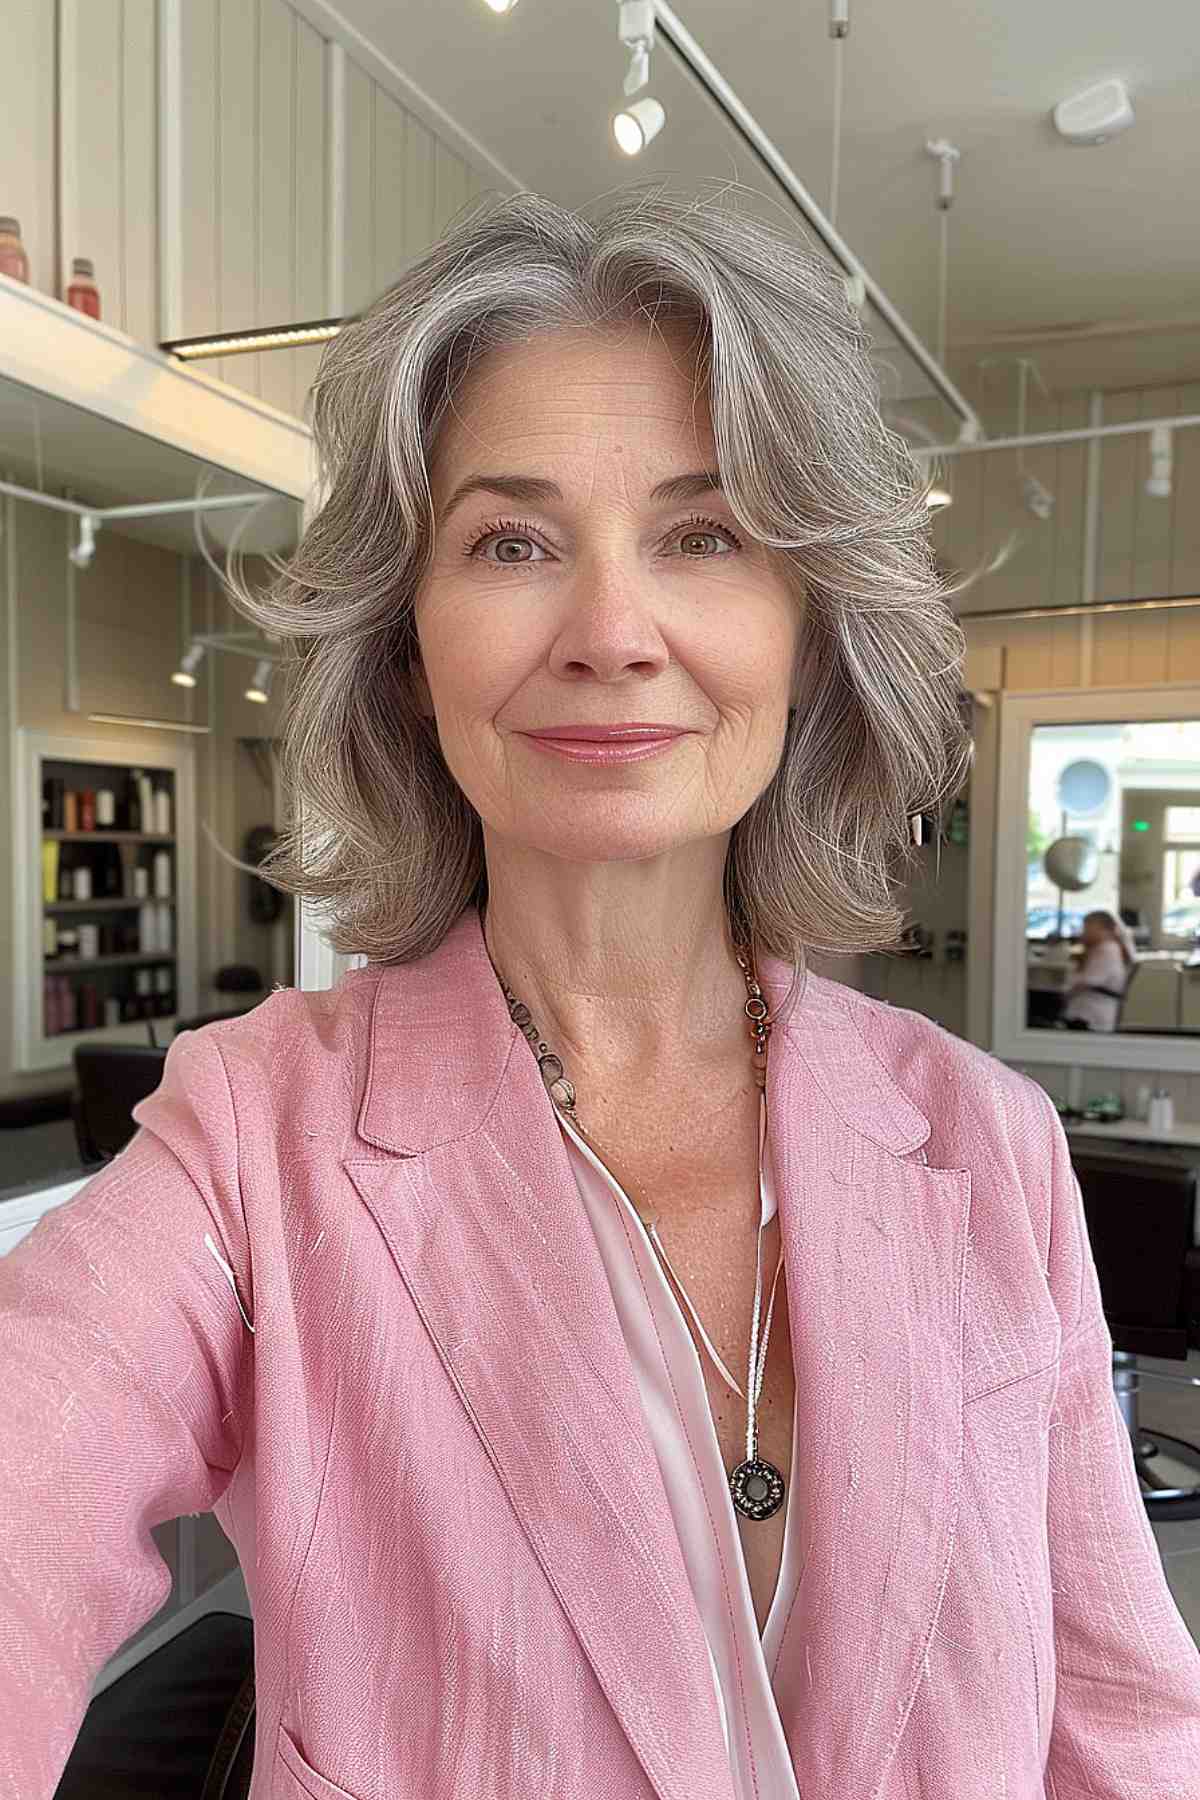 Senior woman with a short layered haircut and curtain bangs, showcasing natural gray hair, perfect for thin hair and heart-shaped faces.